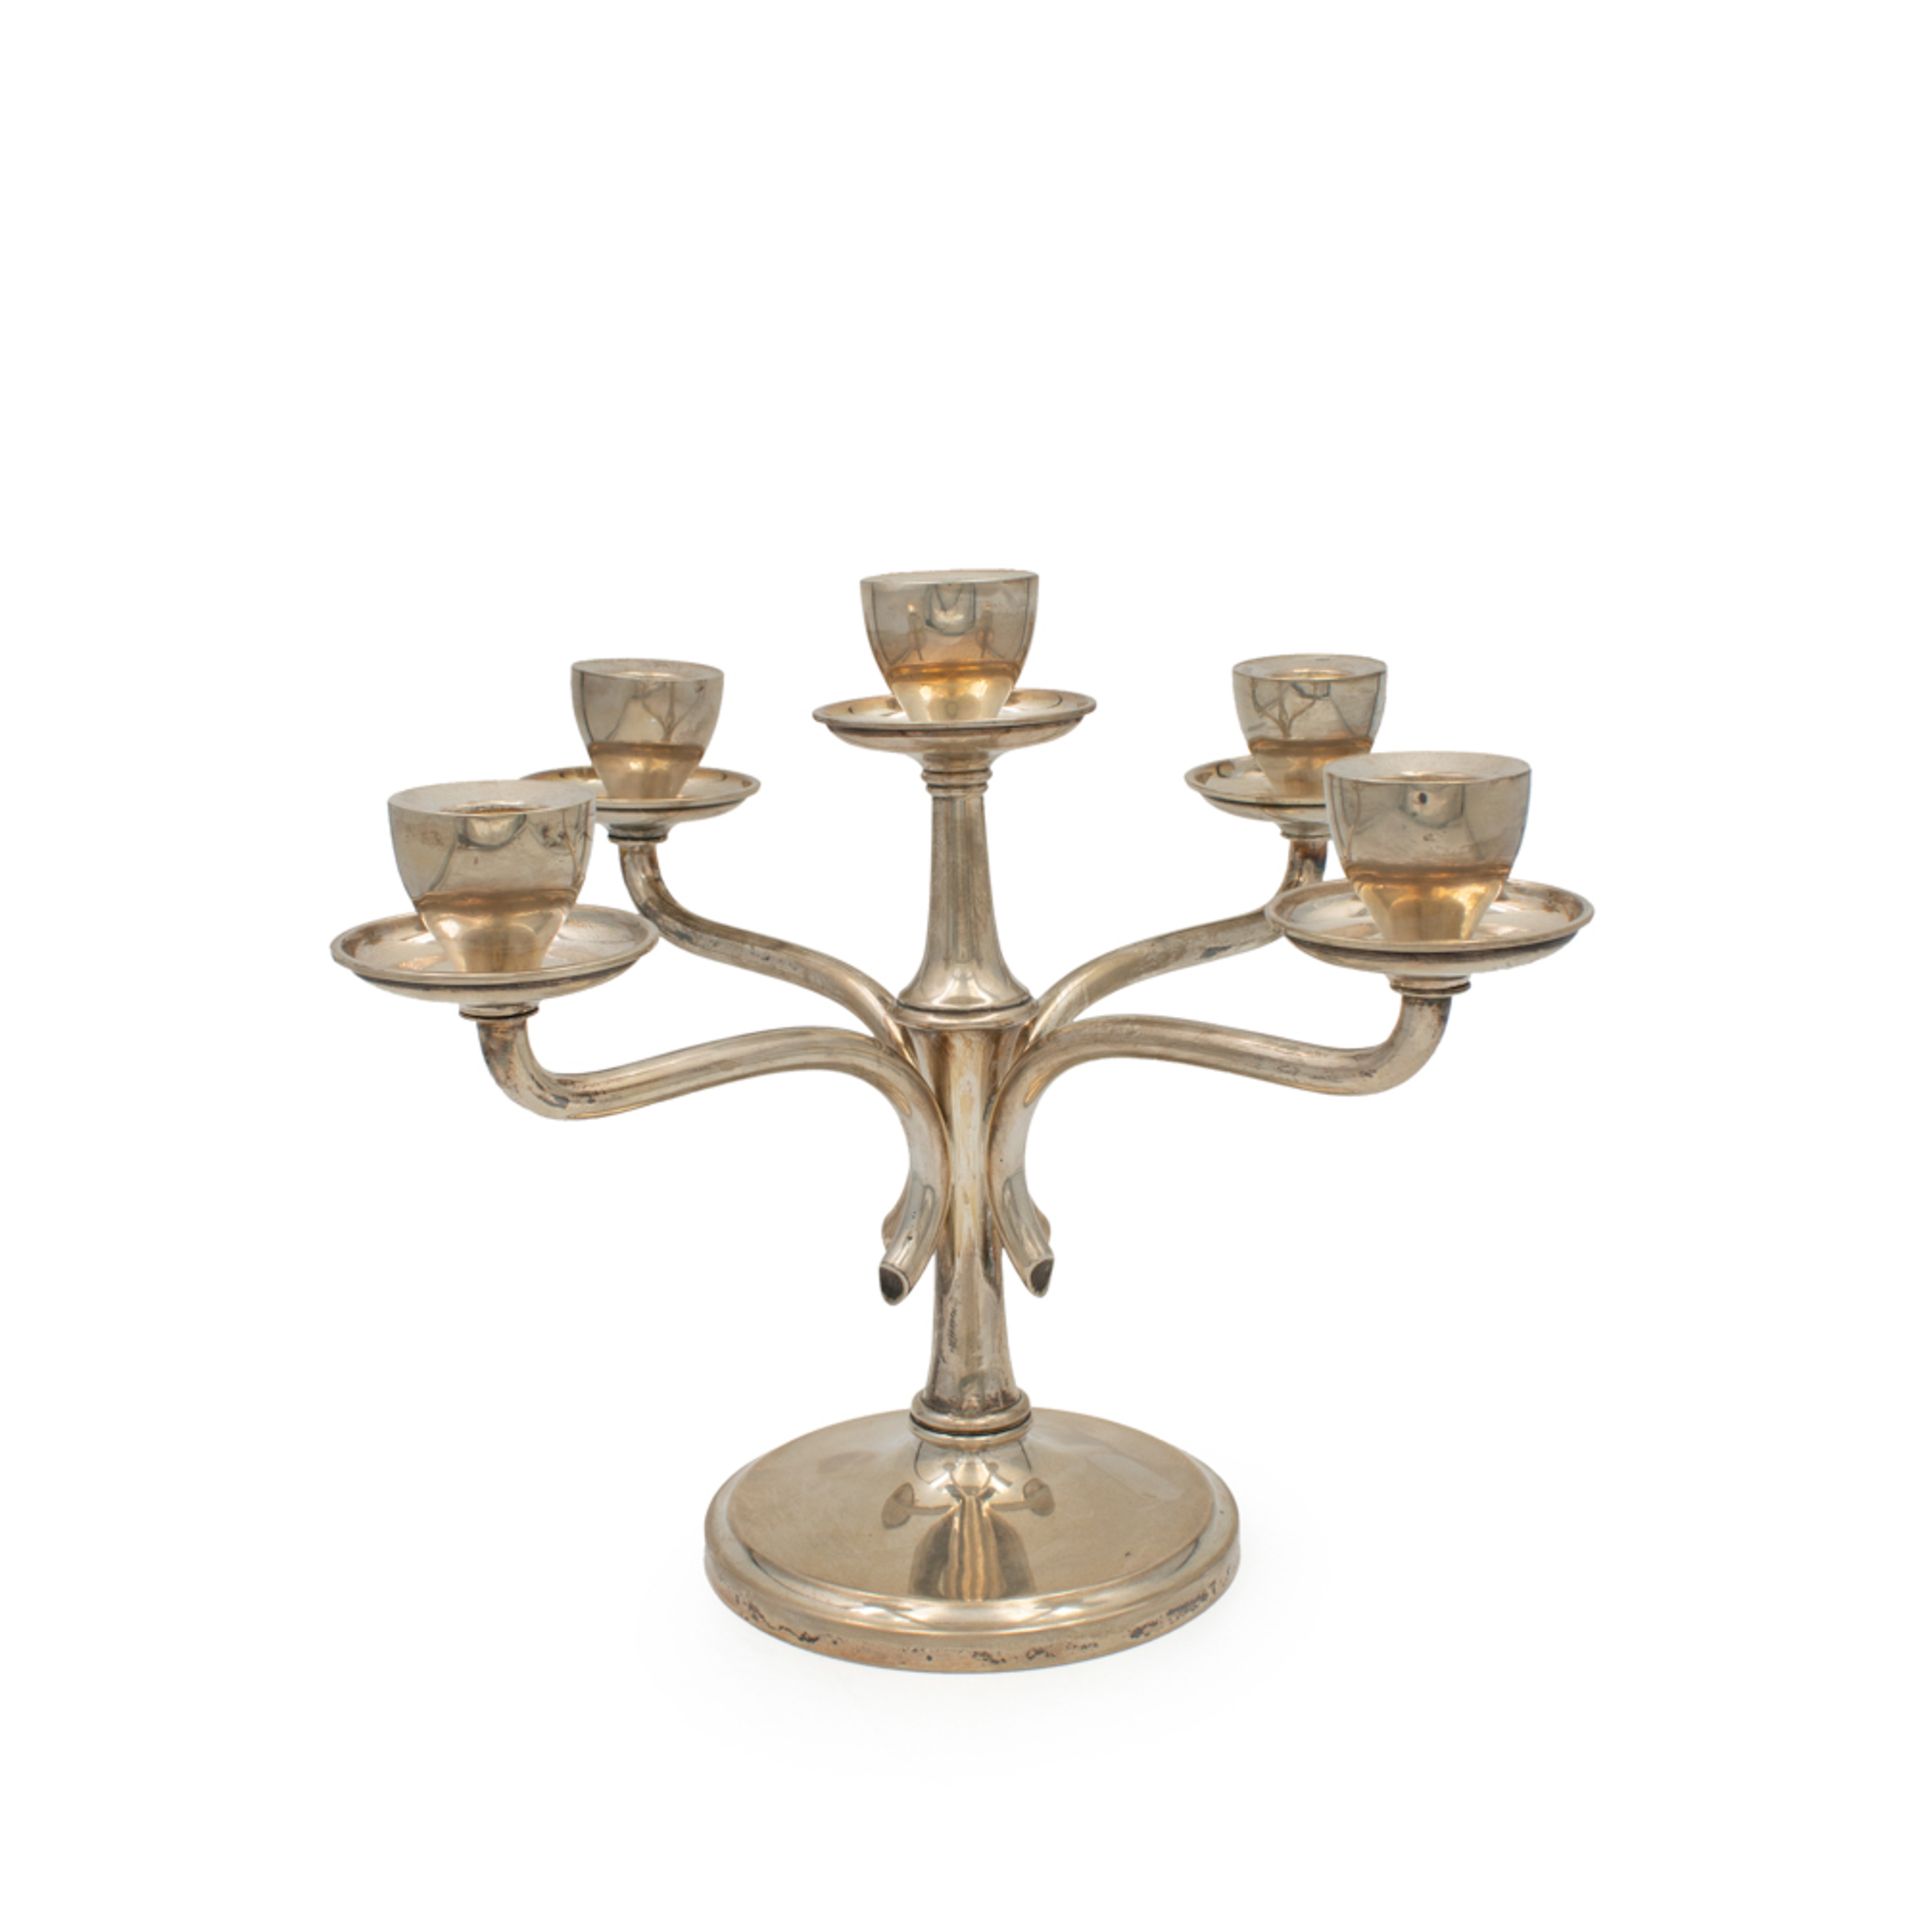 Five-light silver candelabra